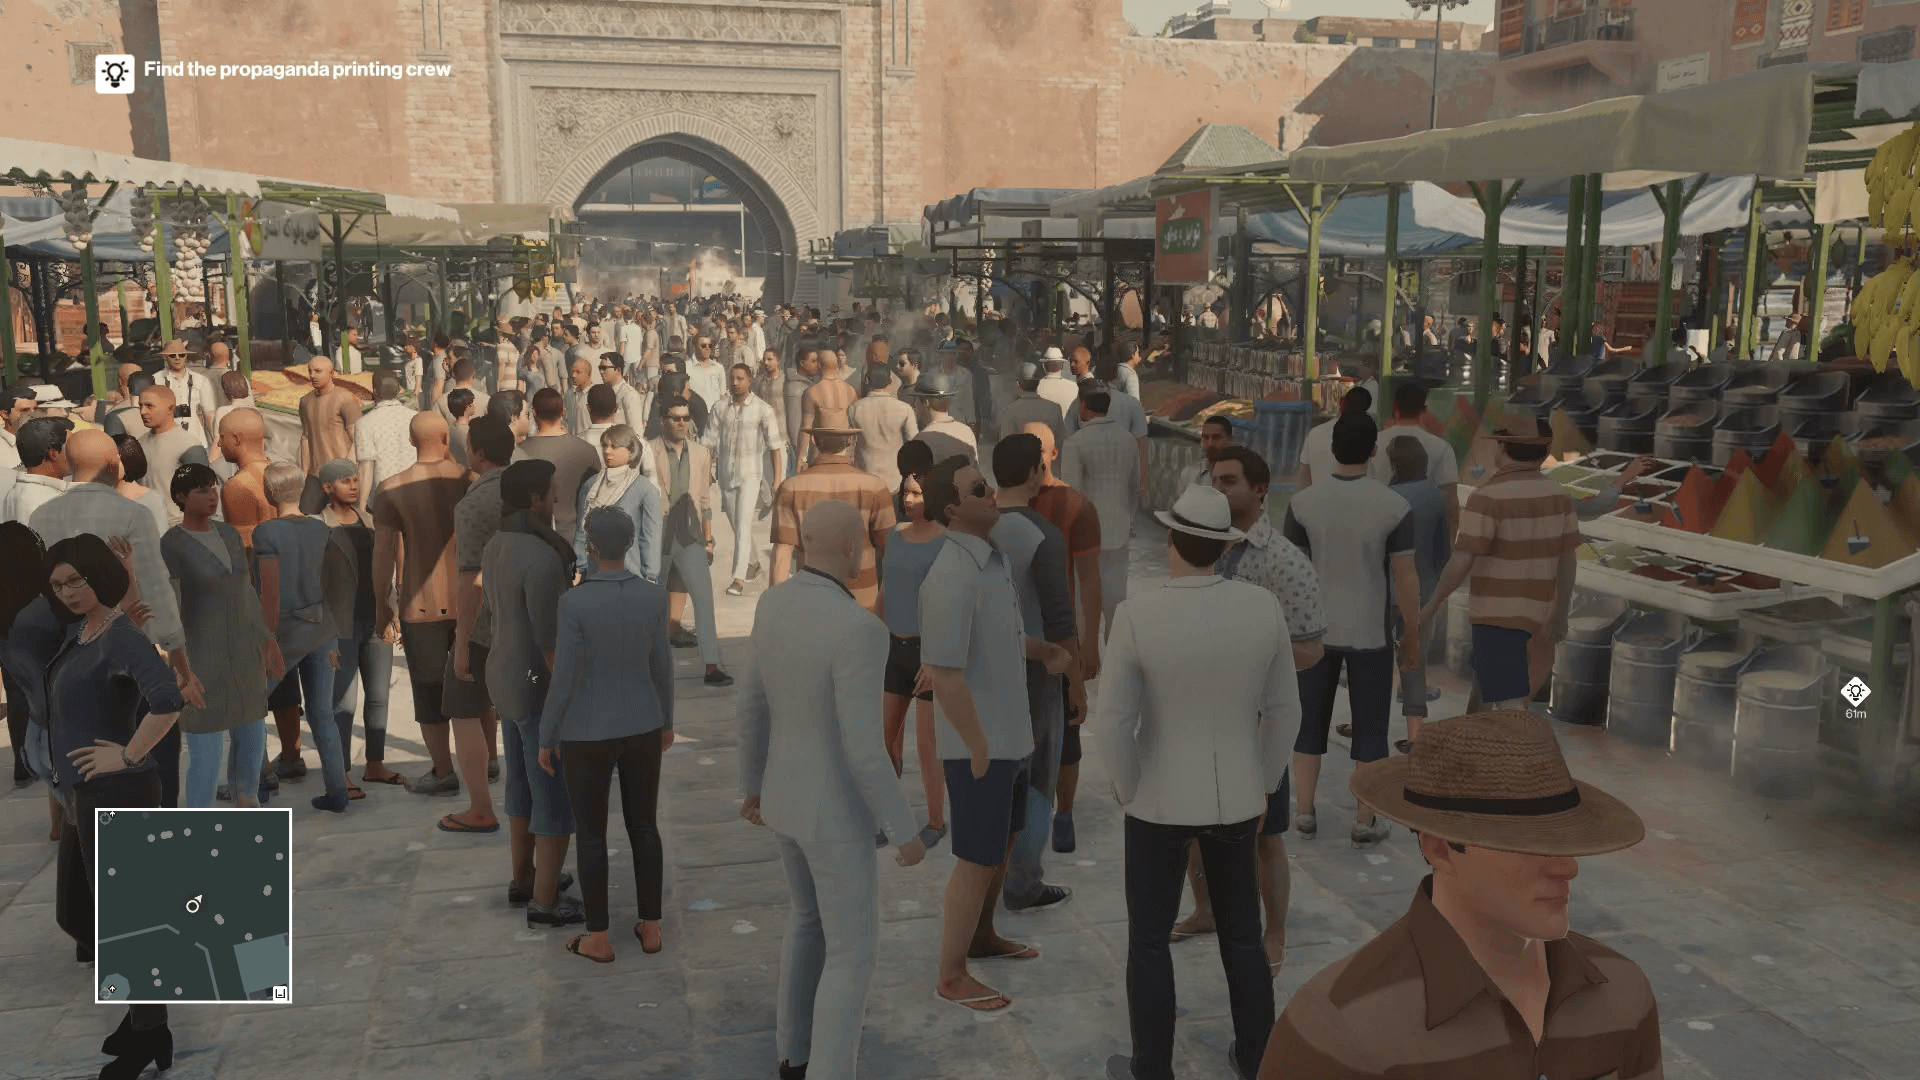 Hitman - Episode 3: Marrakesh